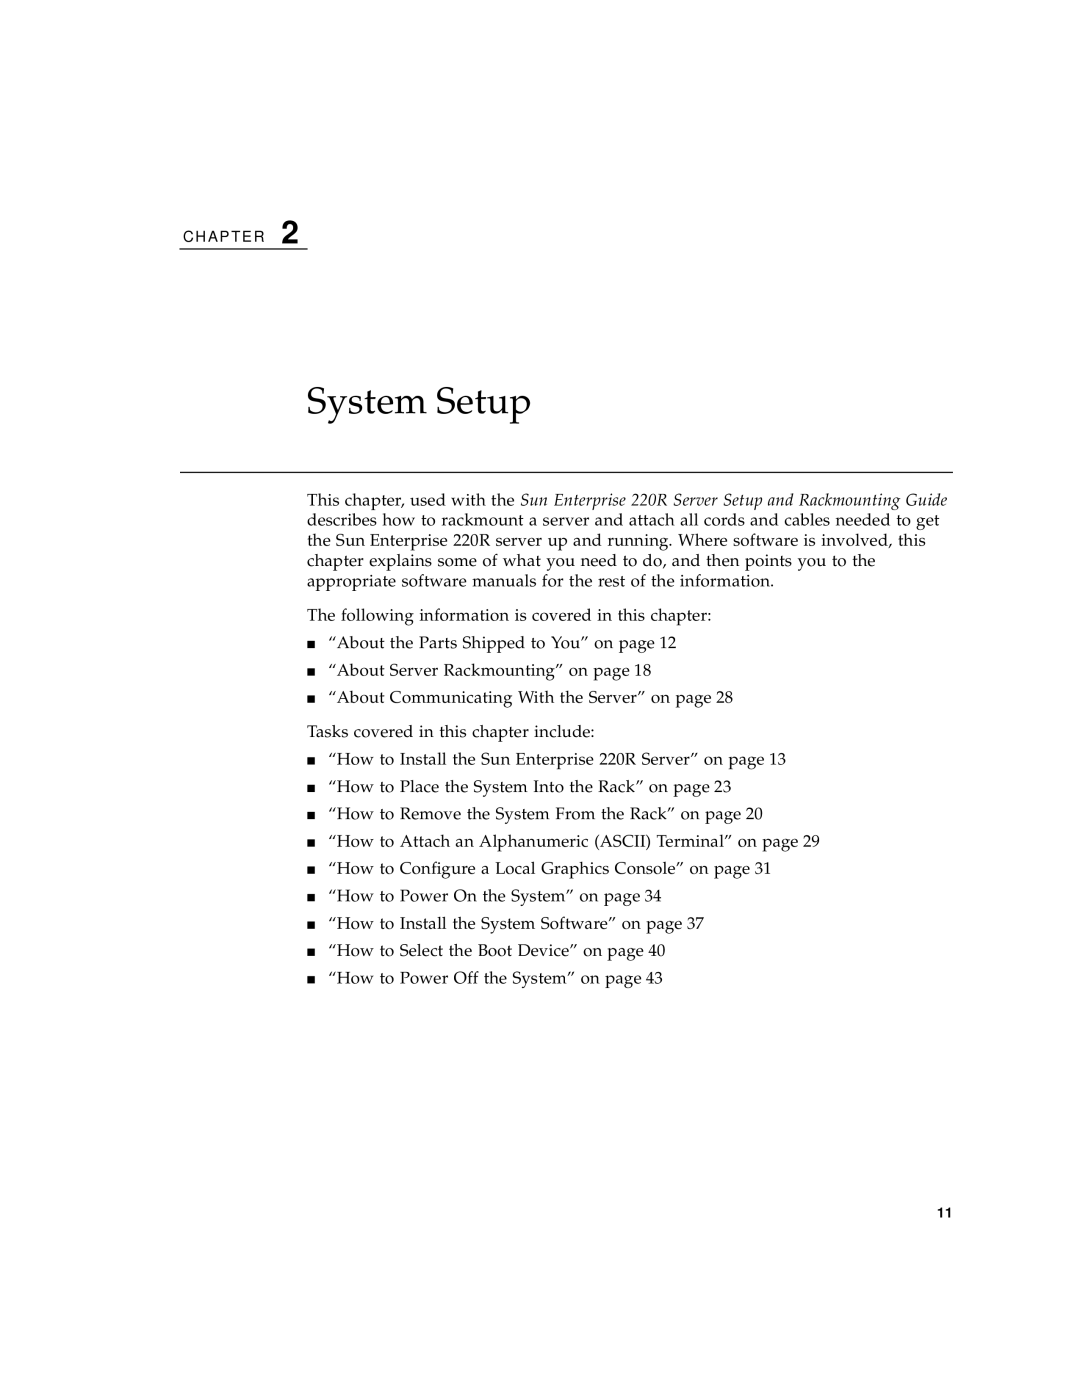 Sun Microsystems 220R manual System Setup 